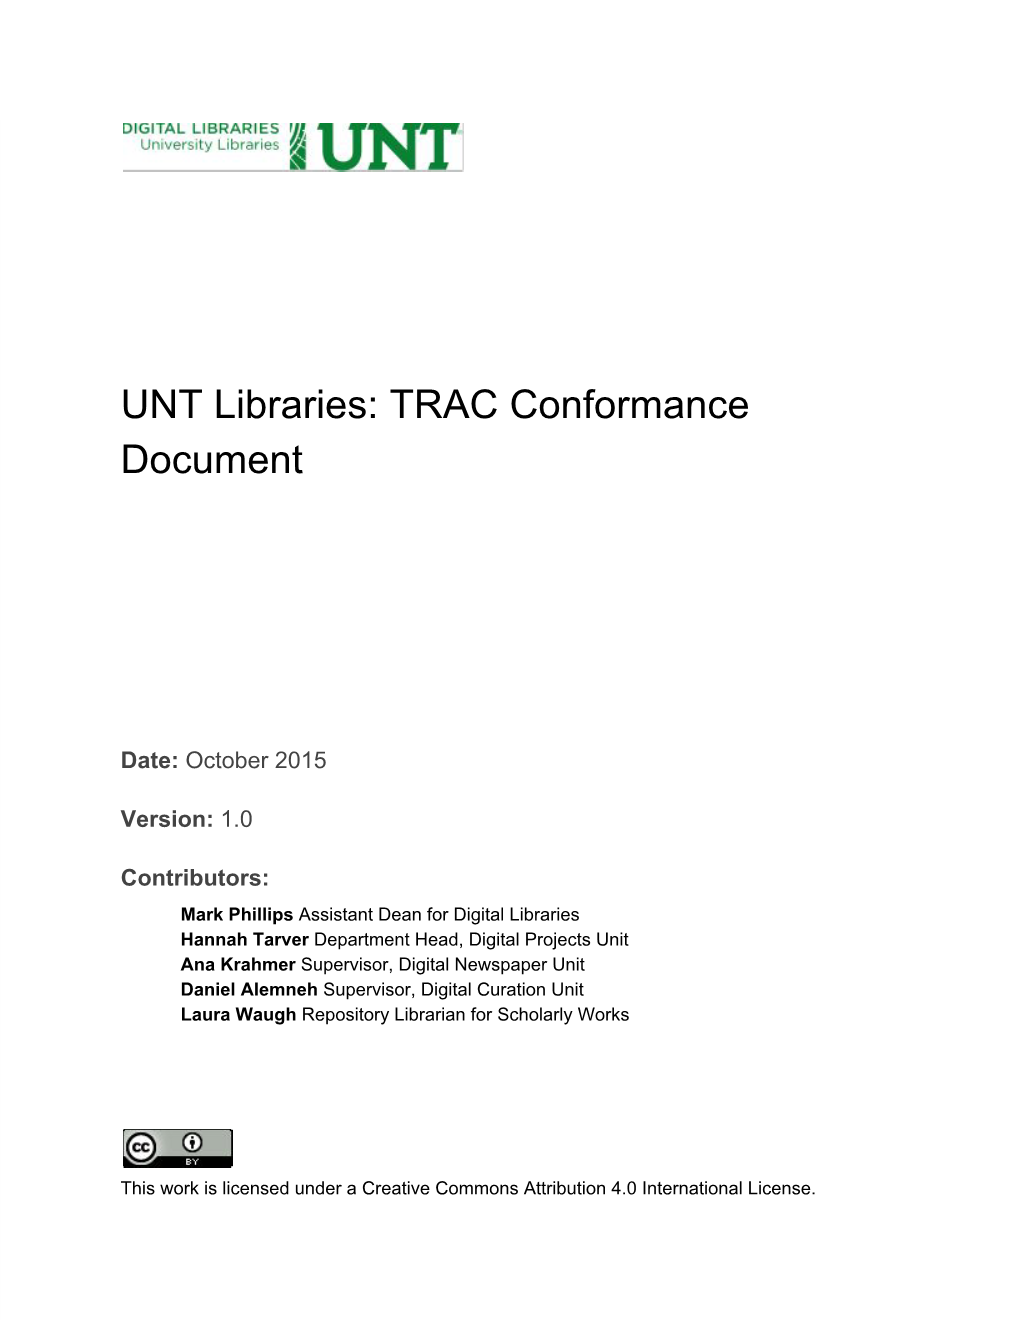 UNT Libraries: TRAC Conformance Document